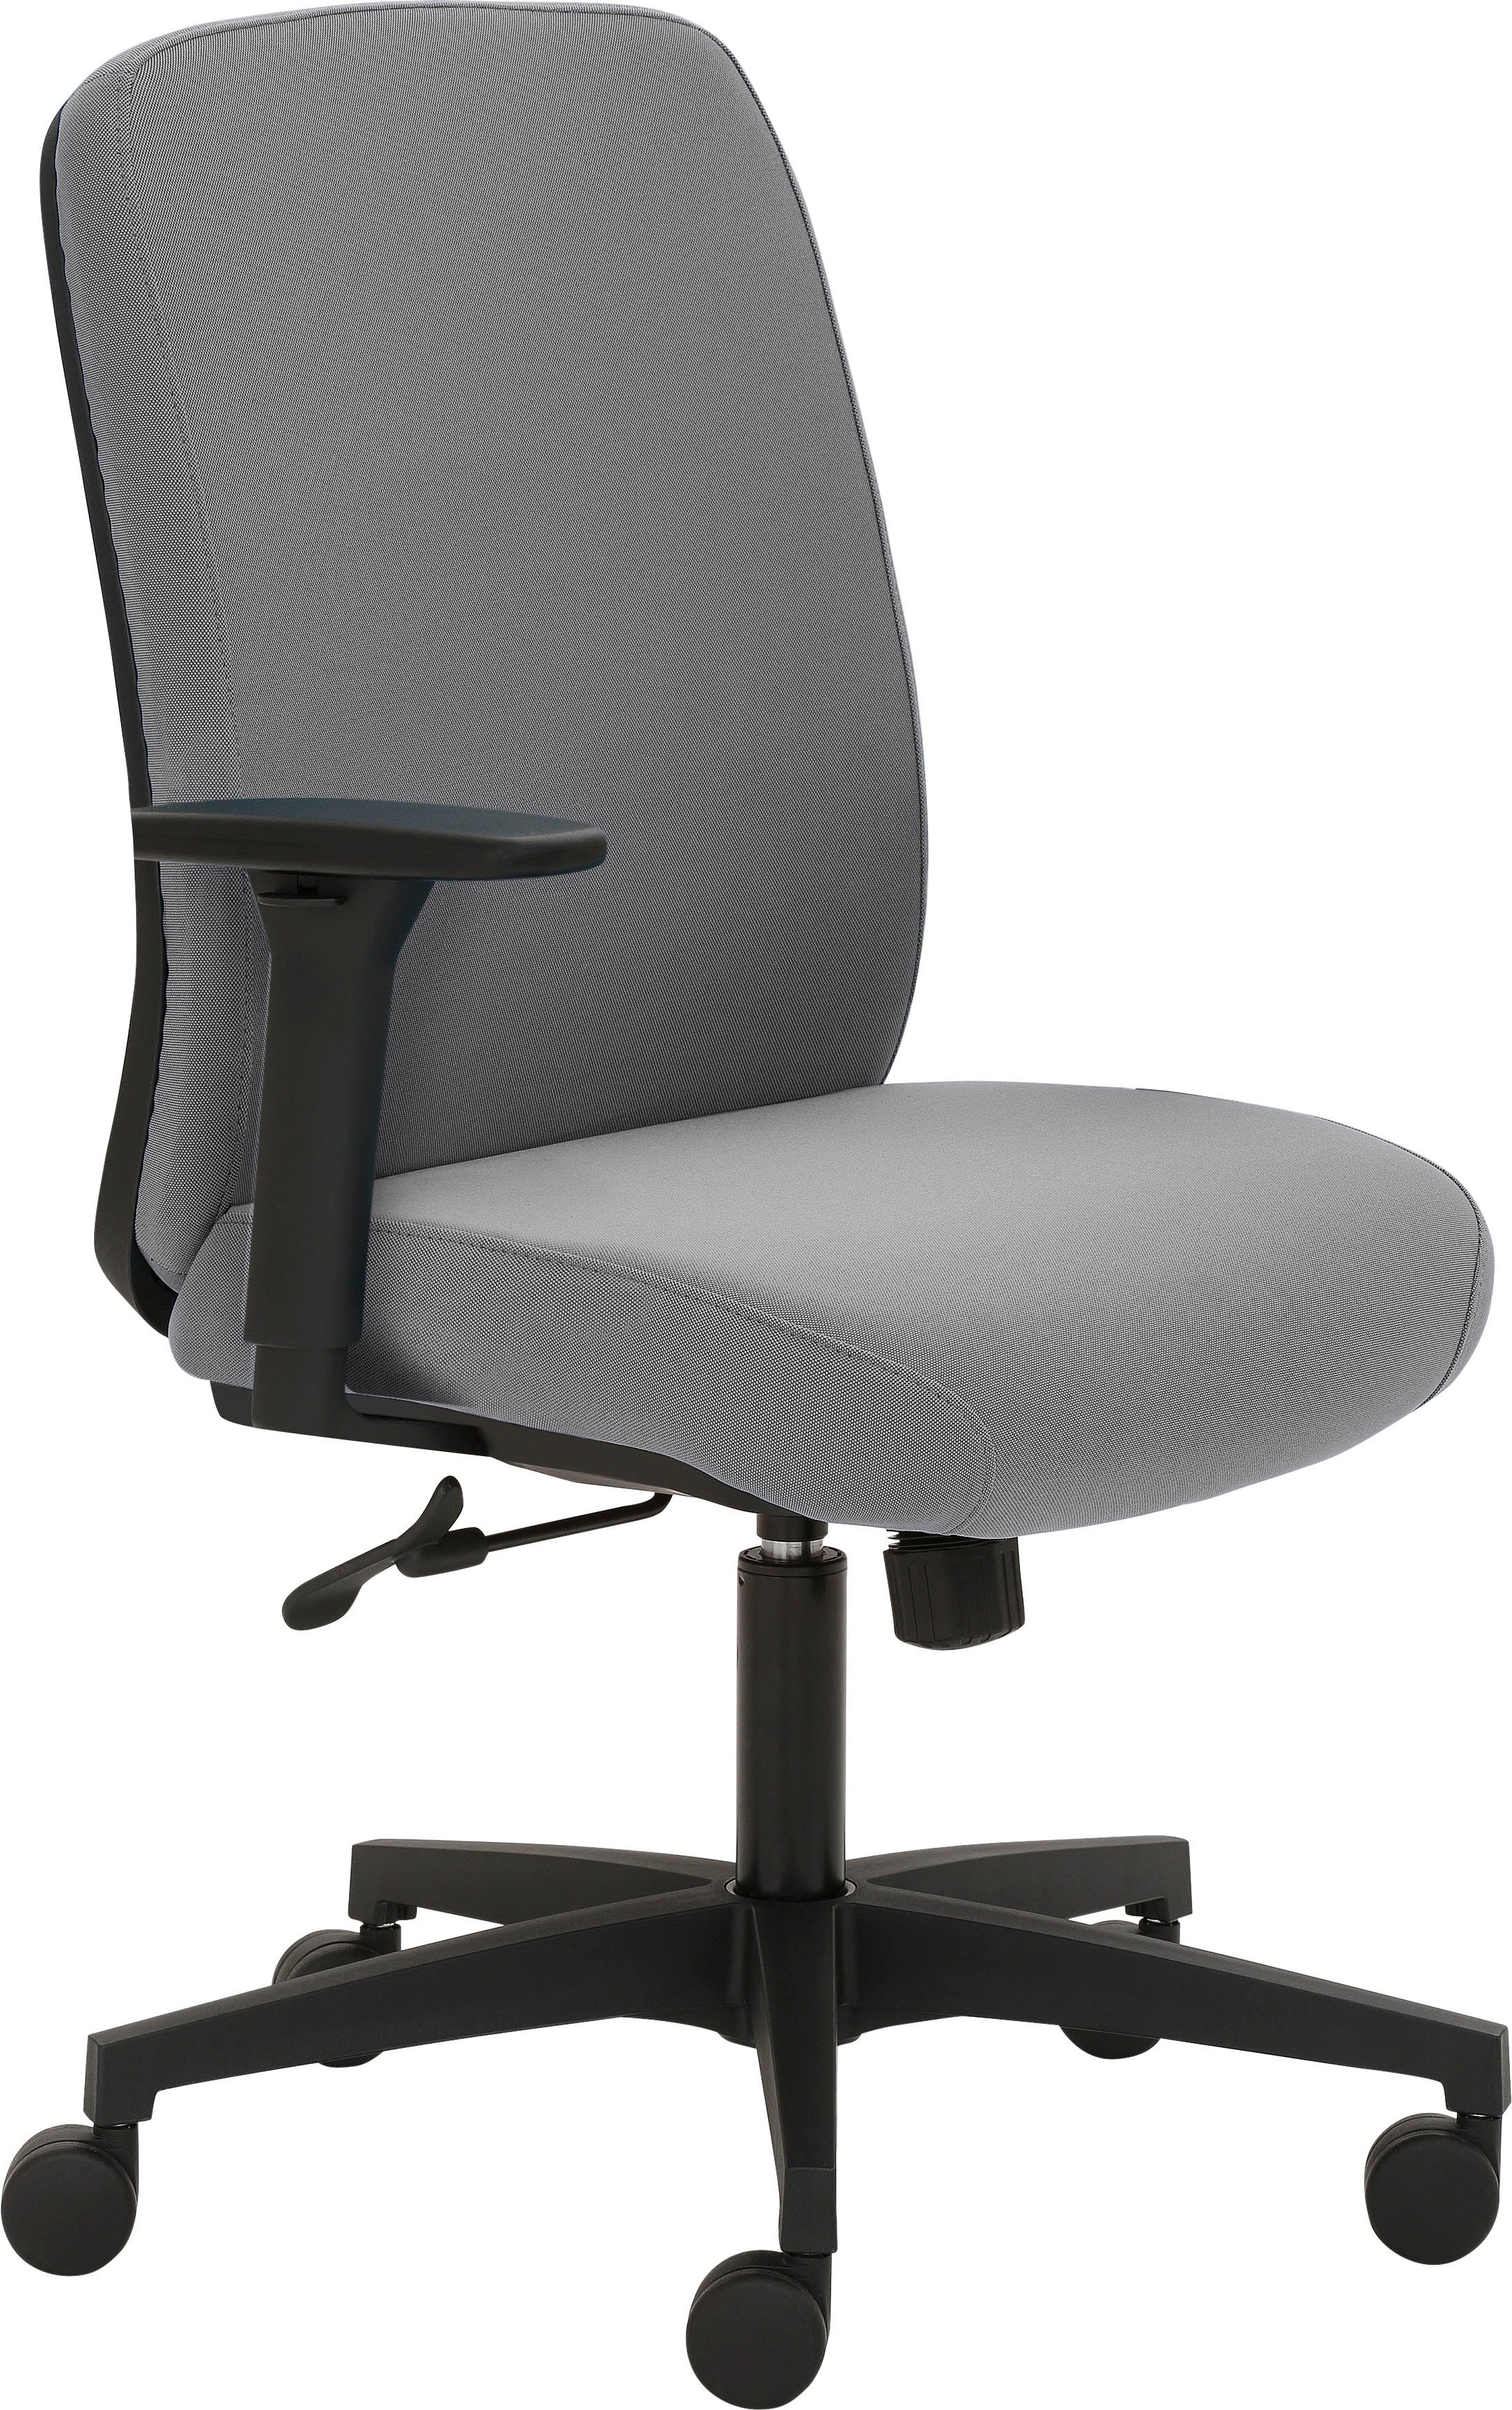 Mayer Sitzmöbel Drehstuhl 2219, GS-zertifiziert, extra starke Polsterung für maximalen Sitzkomfort Grau | Grau | Drehstühle